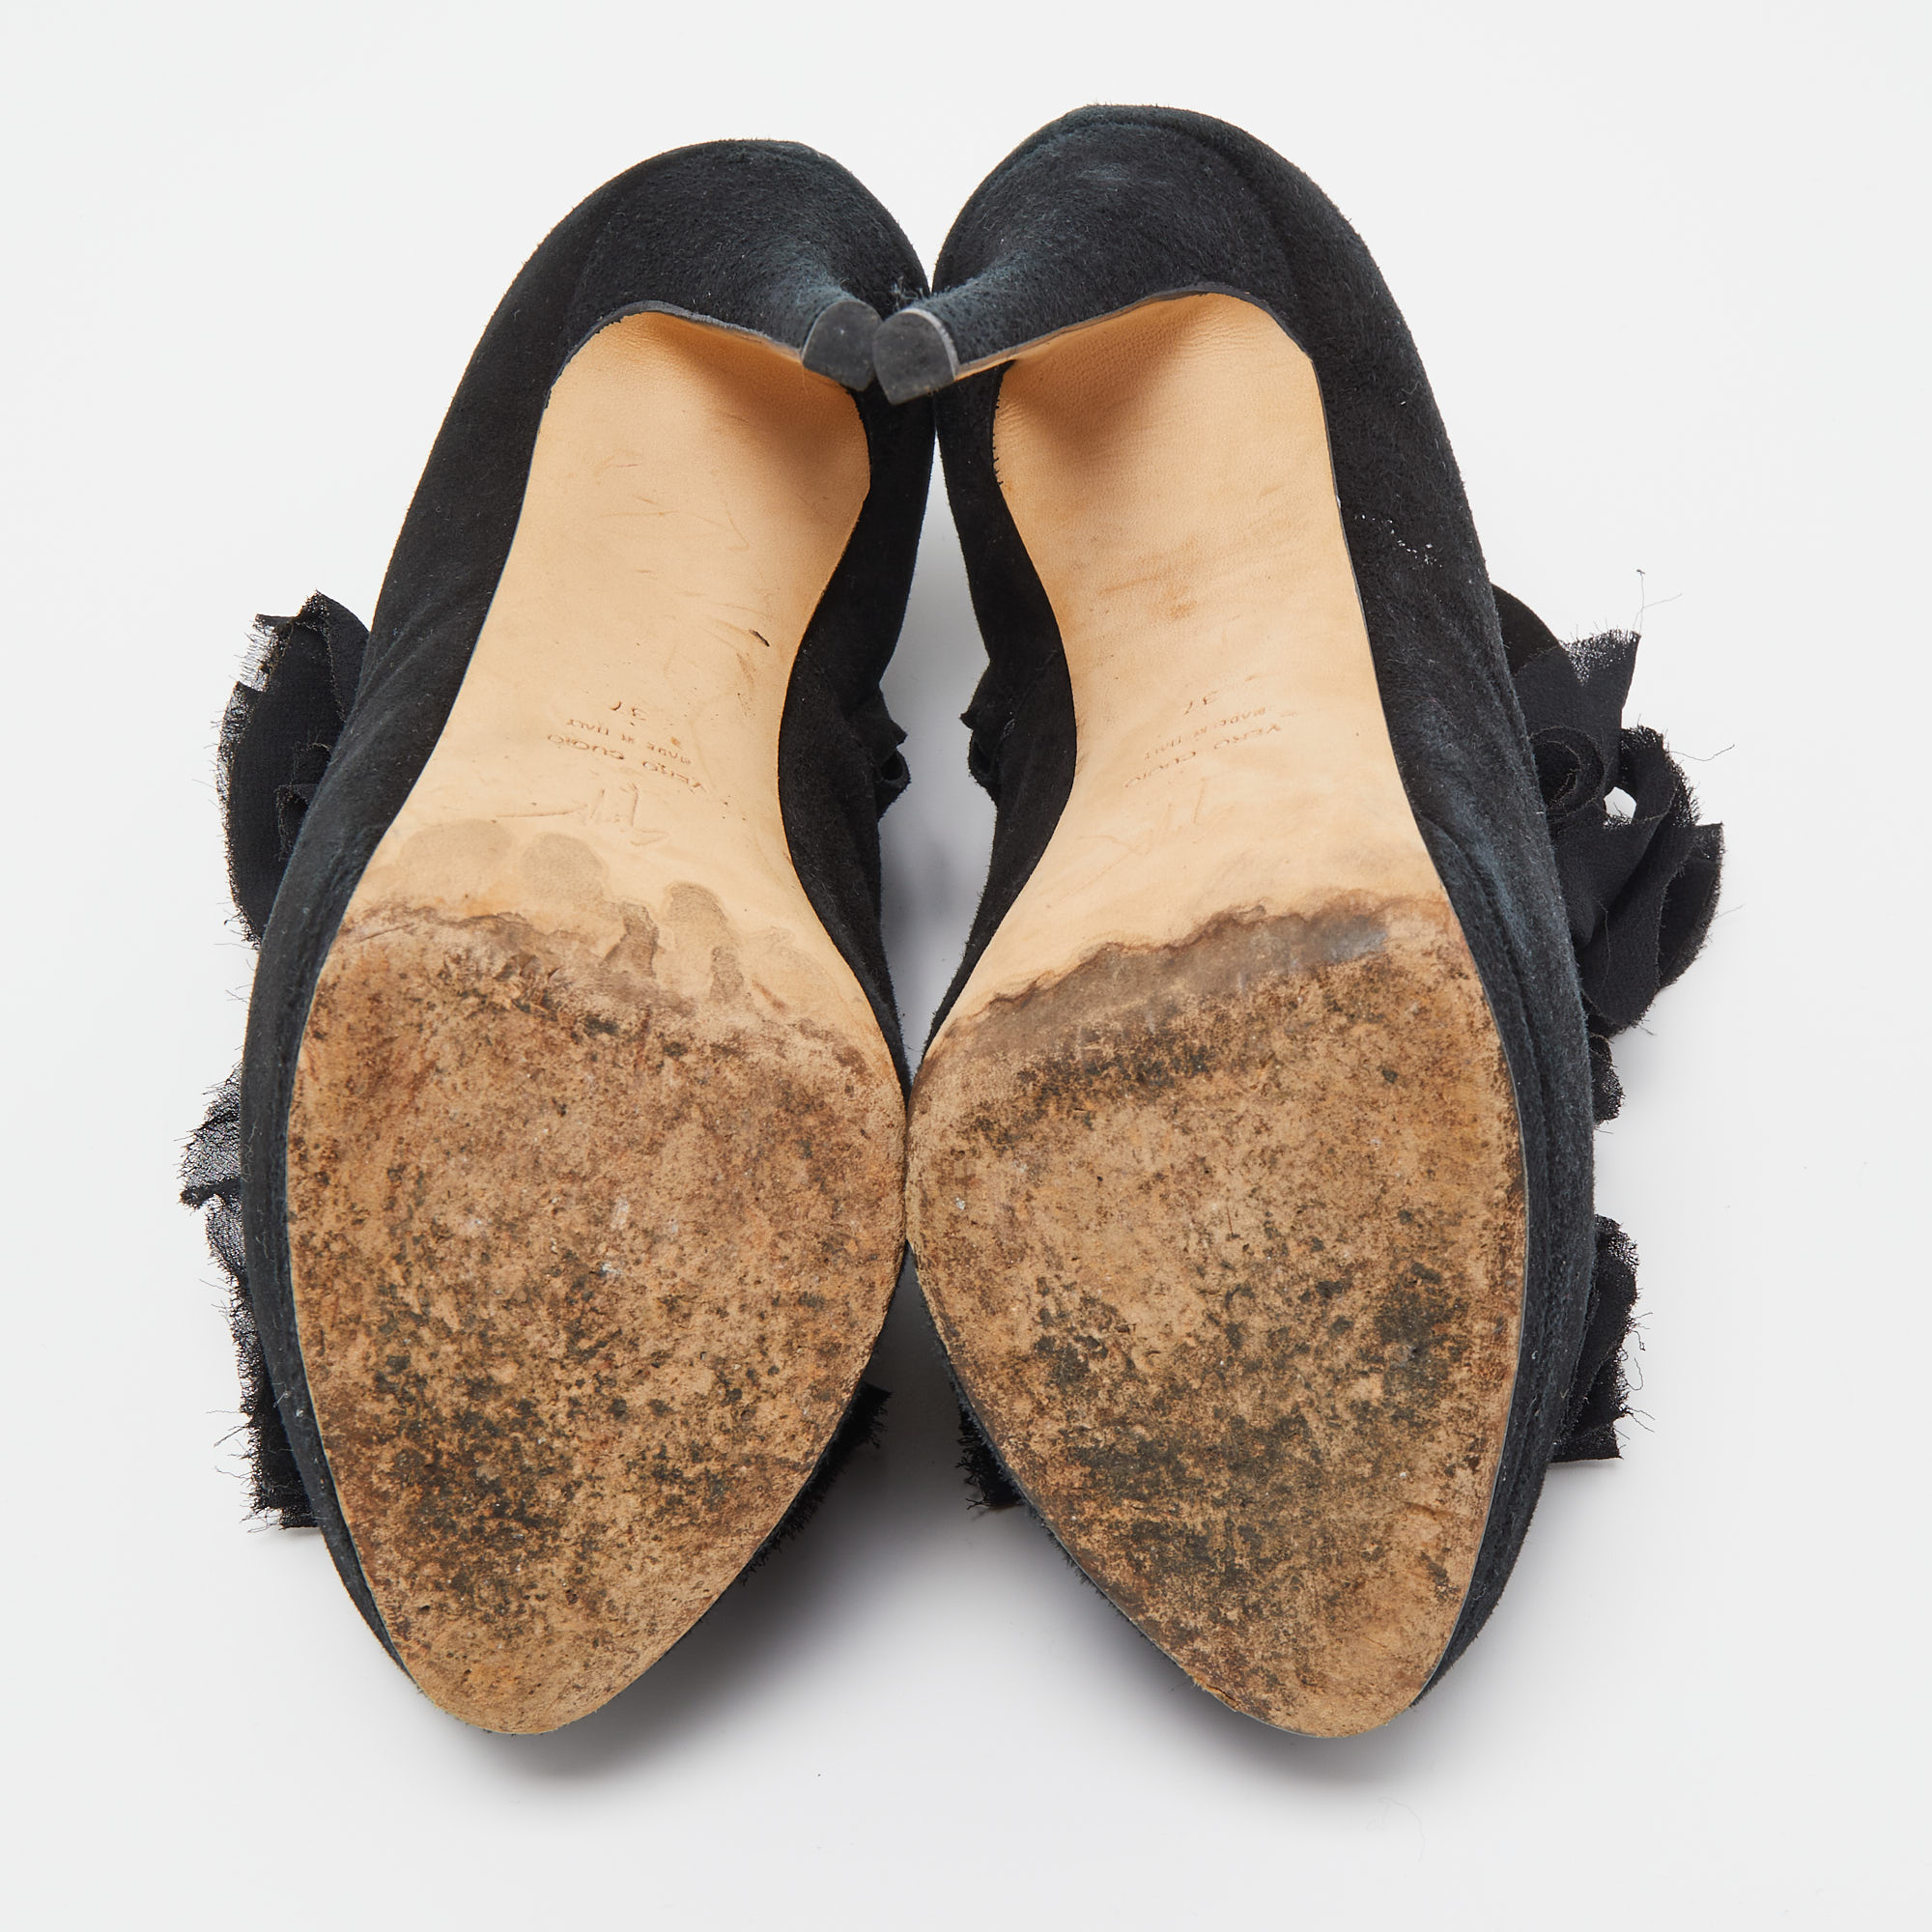 Giuseppe Zanotti Black Suede Frill Peep Toe Ankle Boots Size 37